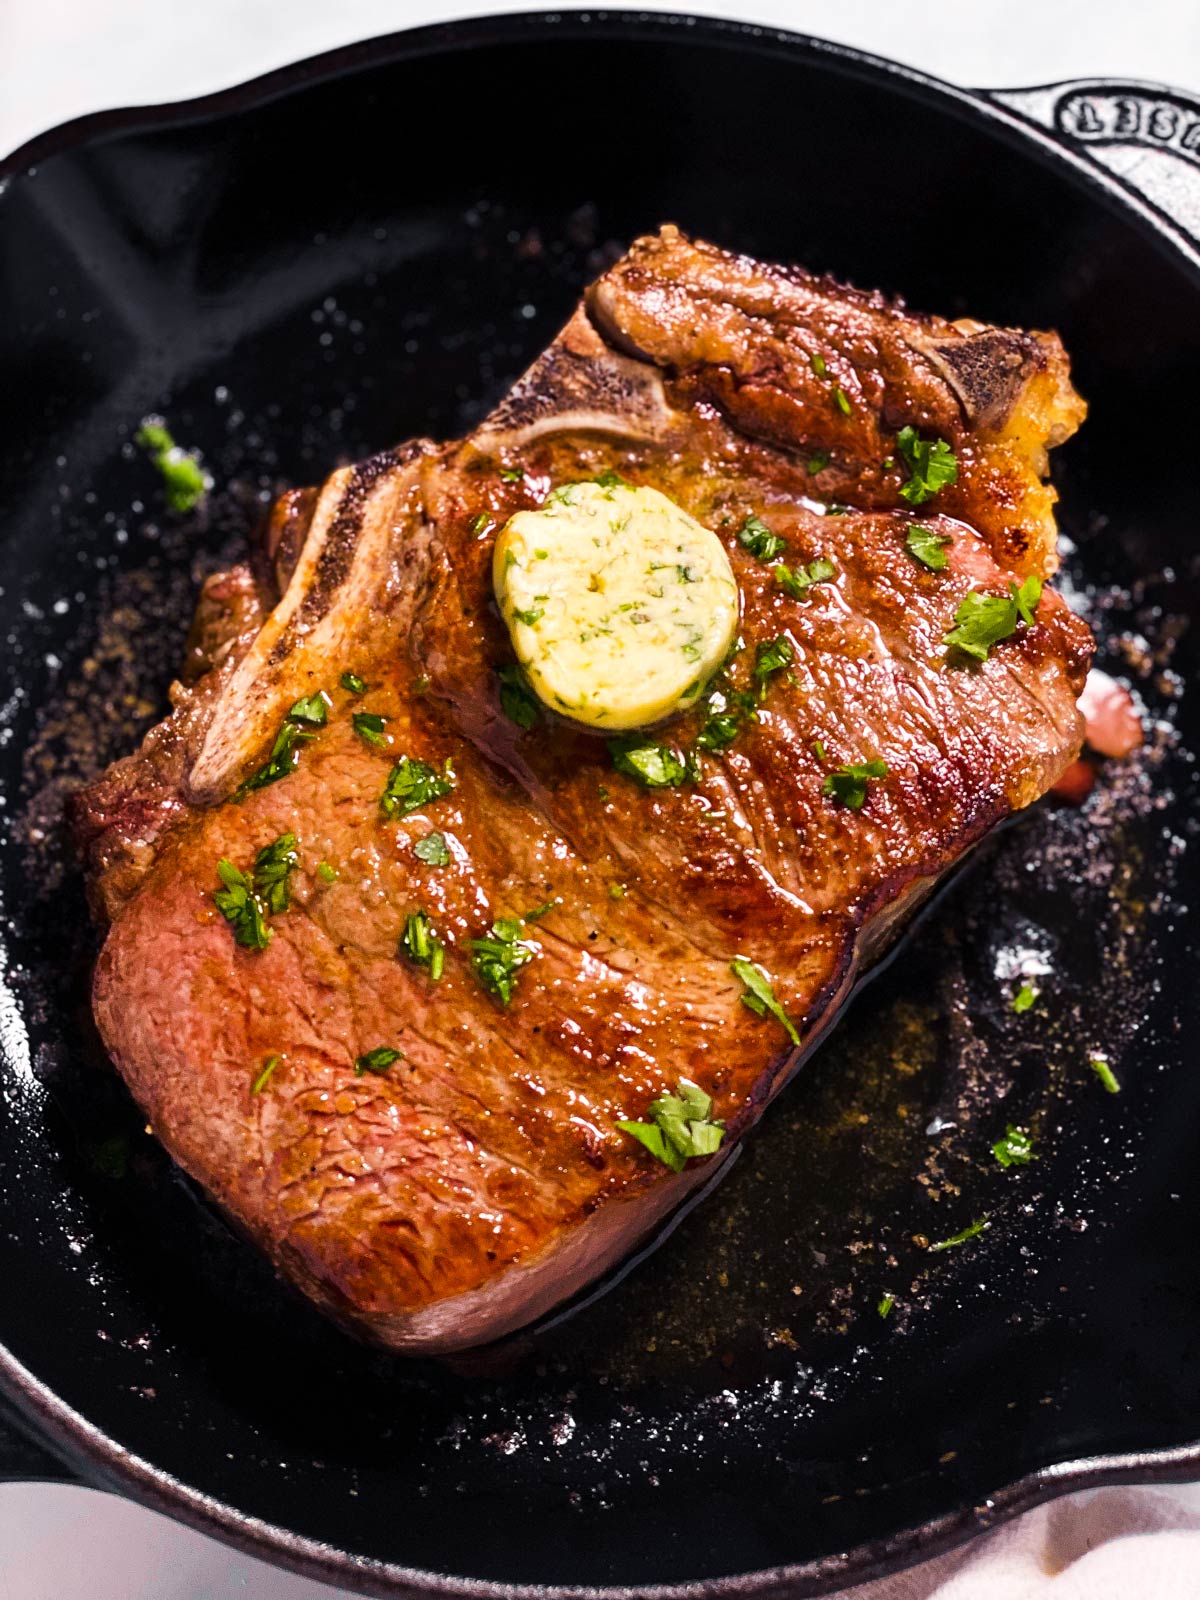 https://www.savorynothings.com/wp-content/uploads/2022/01/oven-baked-steak-recipe-image-9.jpg